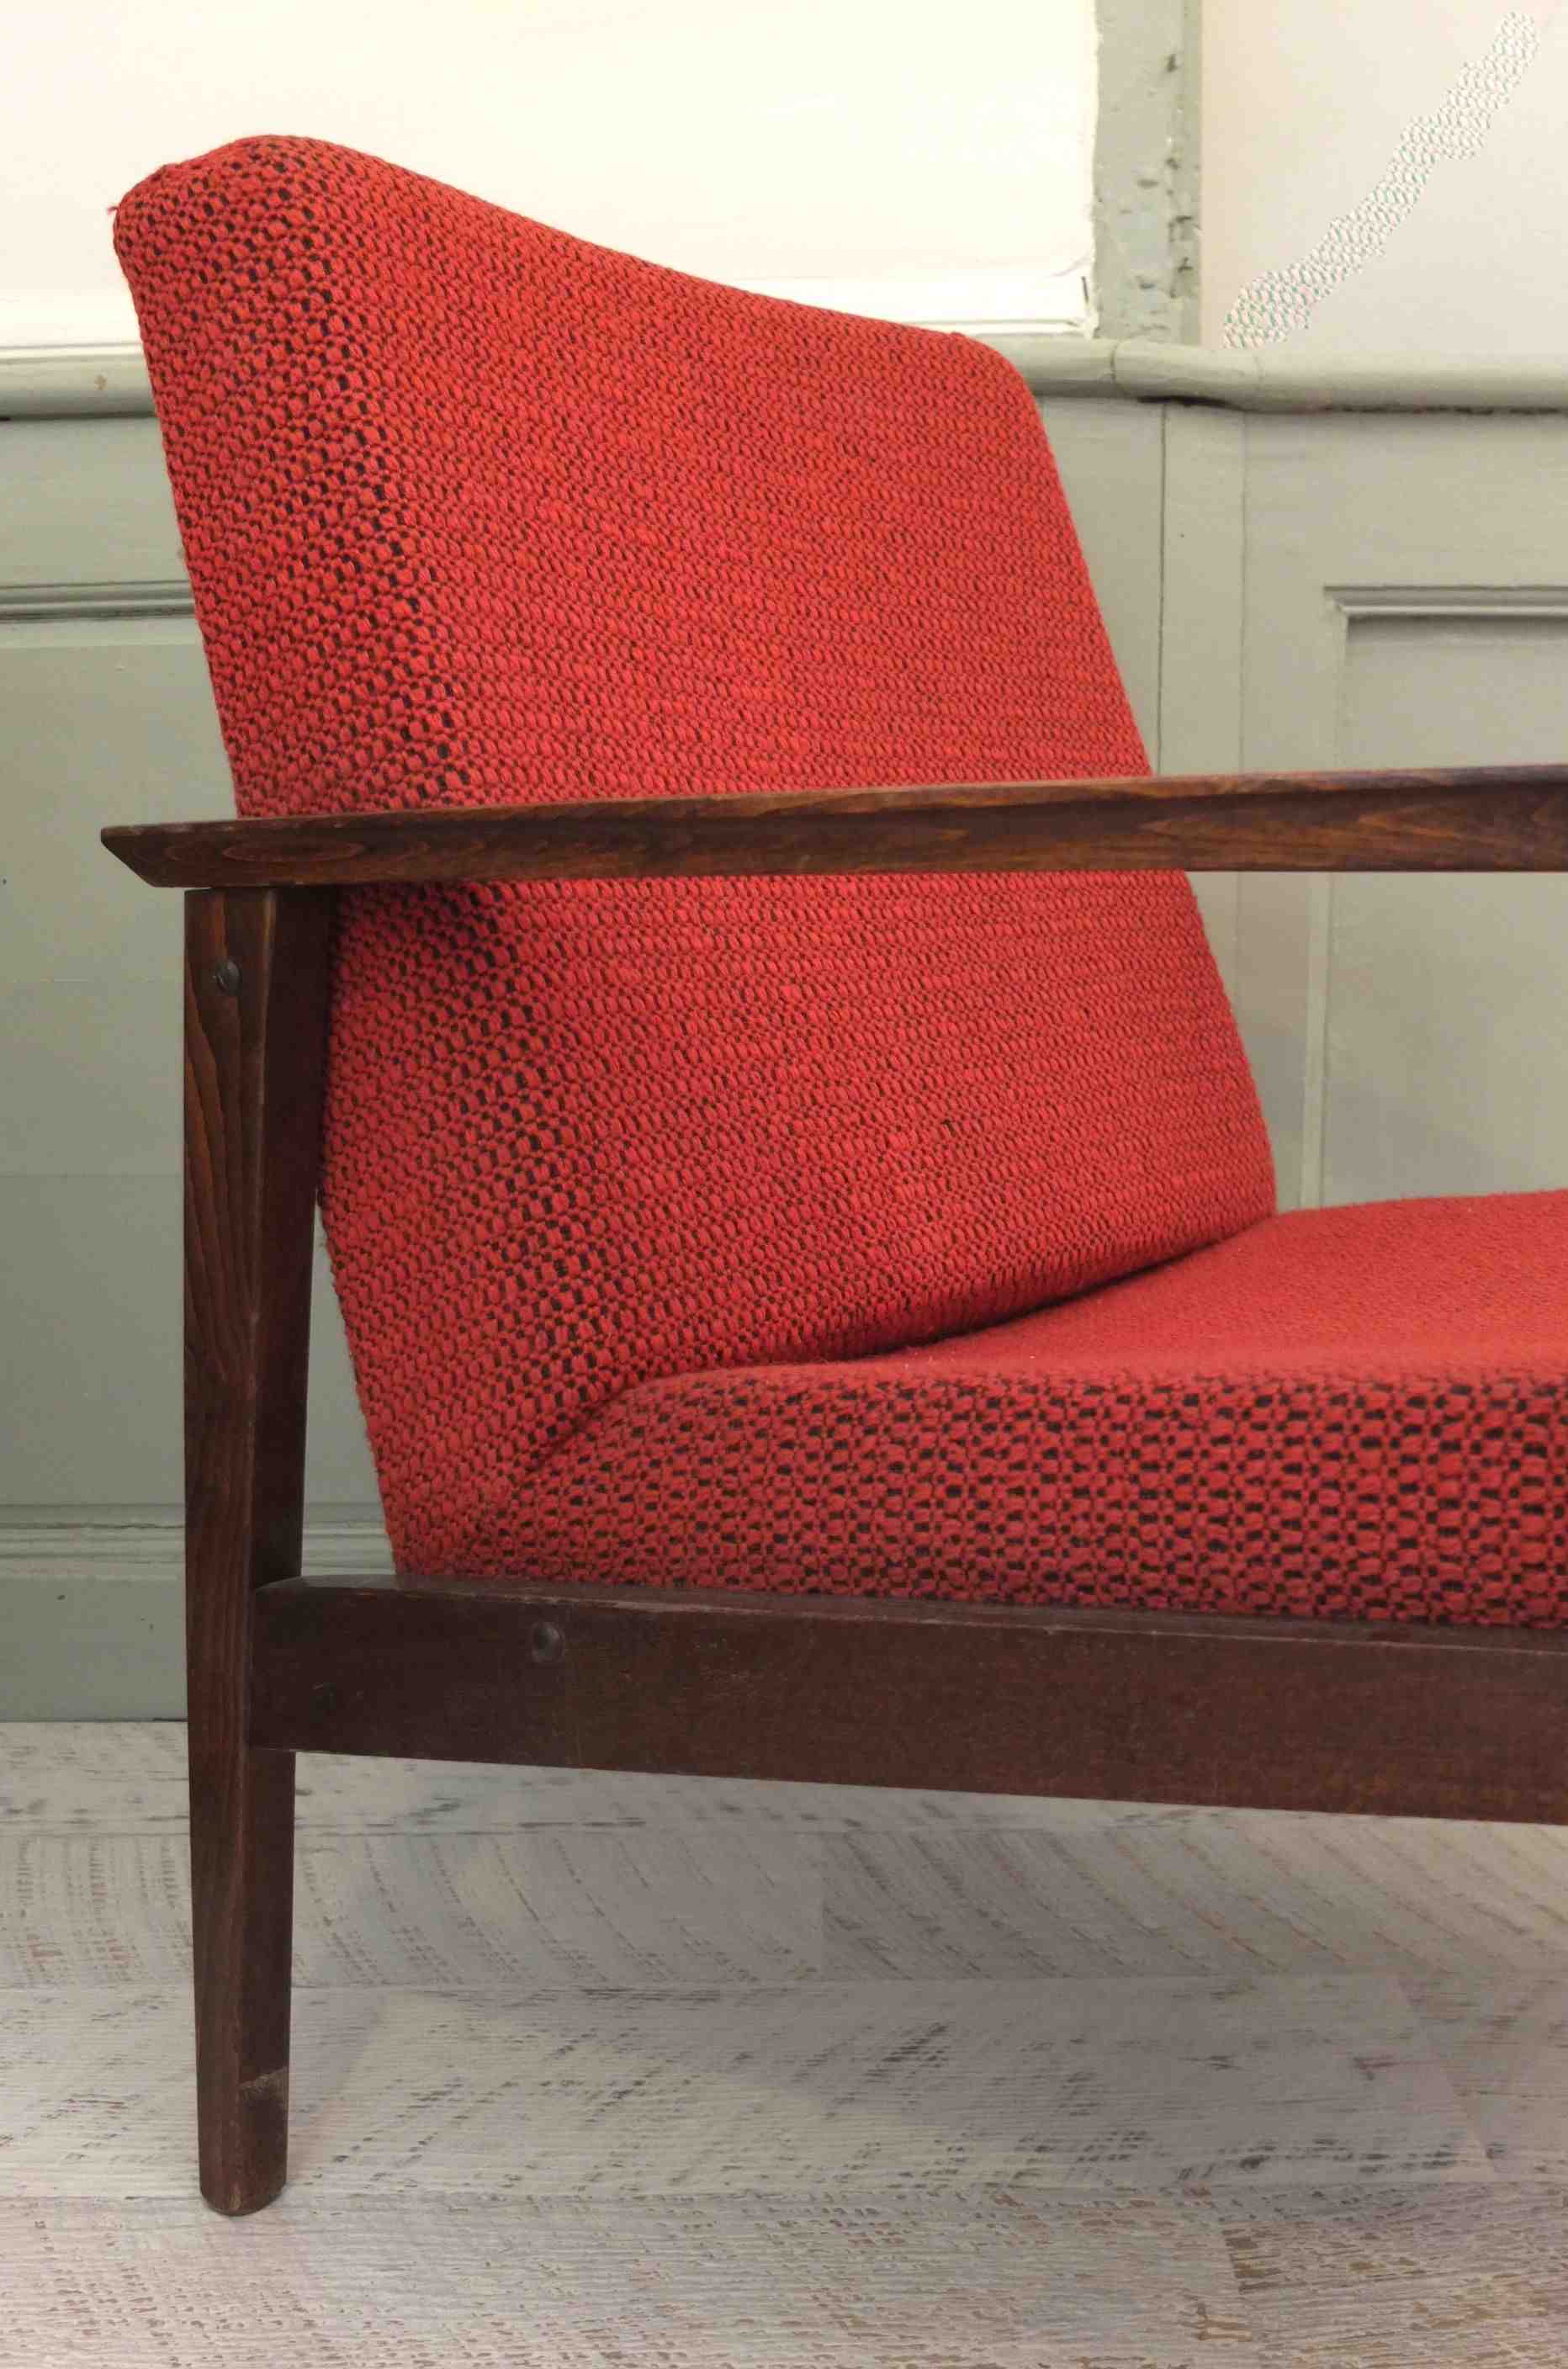 Slavia Vintage fauteuil vintage midcentury lignes modernistes annees 50 "Madison Avenue" 1